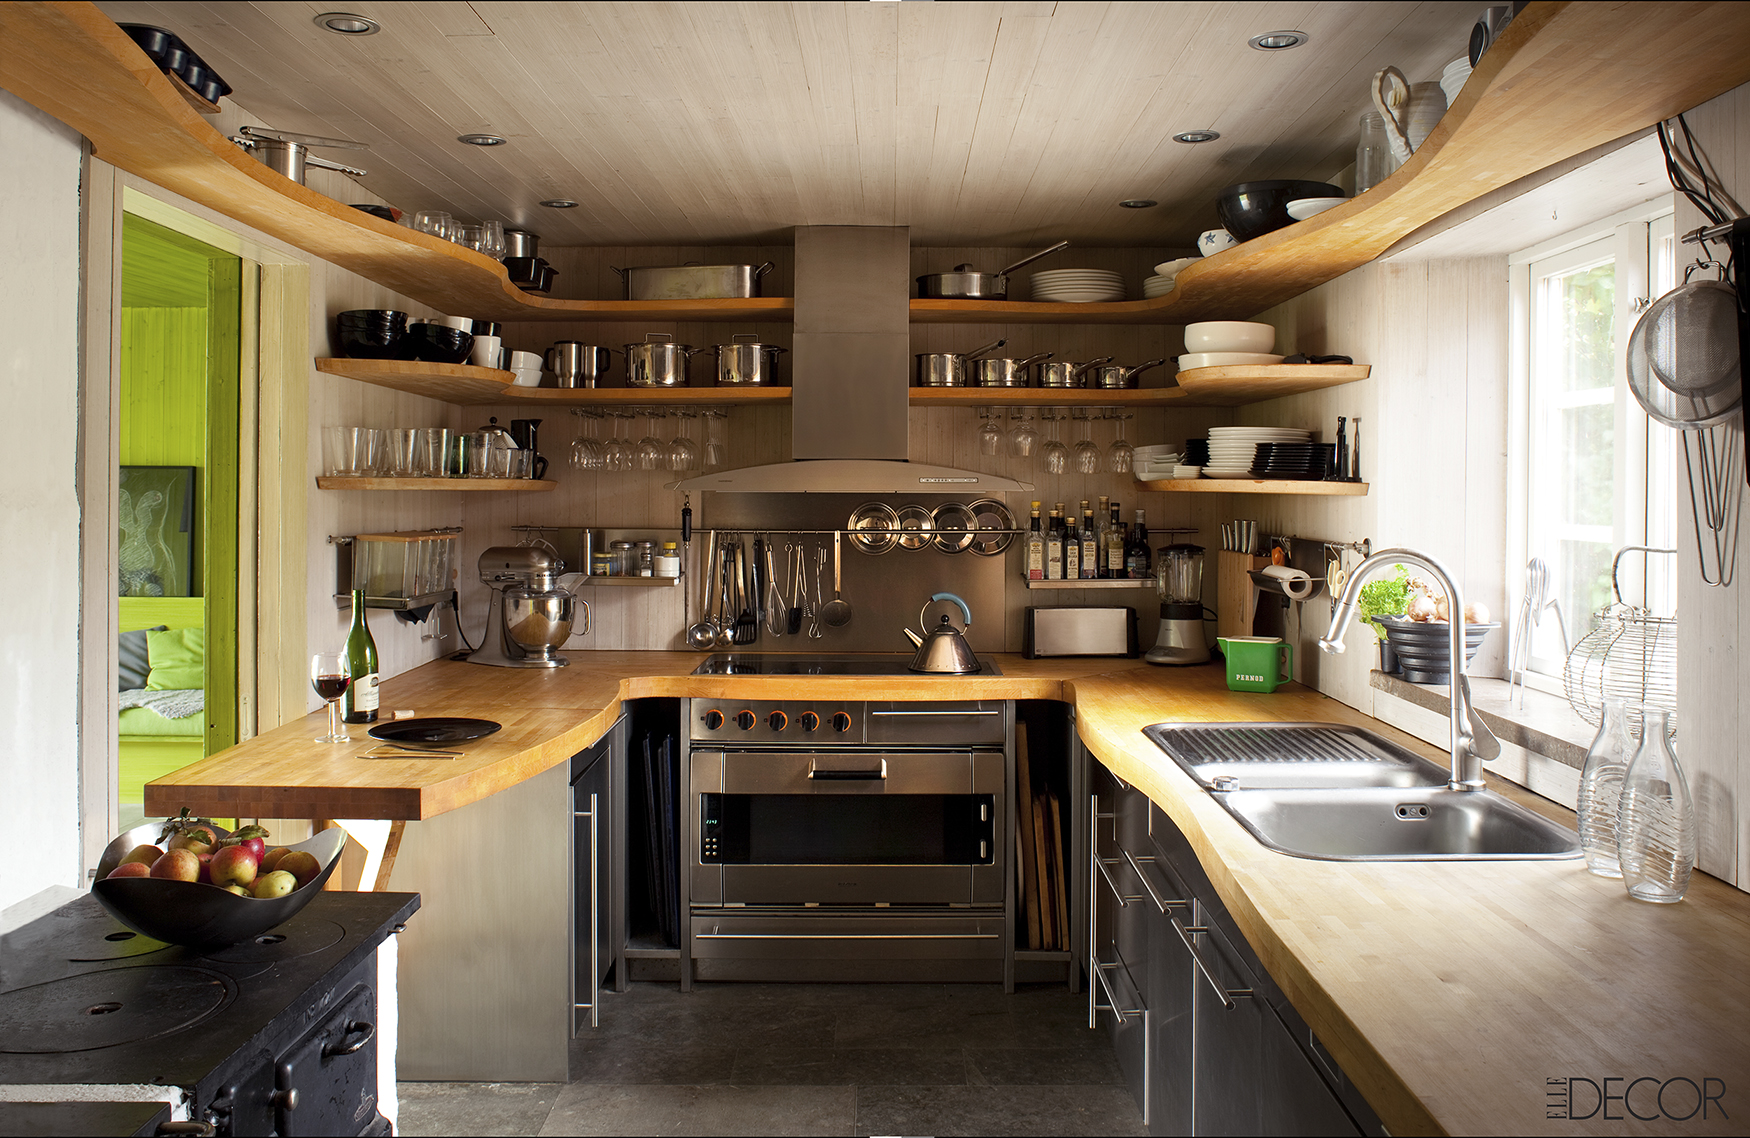 Modern 40 Small Kitchen Design Ideas - Decorating Tiny Kitchens kitchen ideas for small kitchens